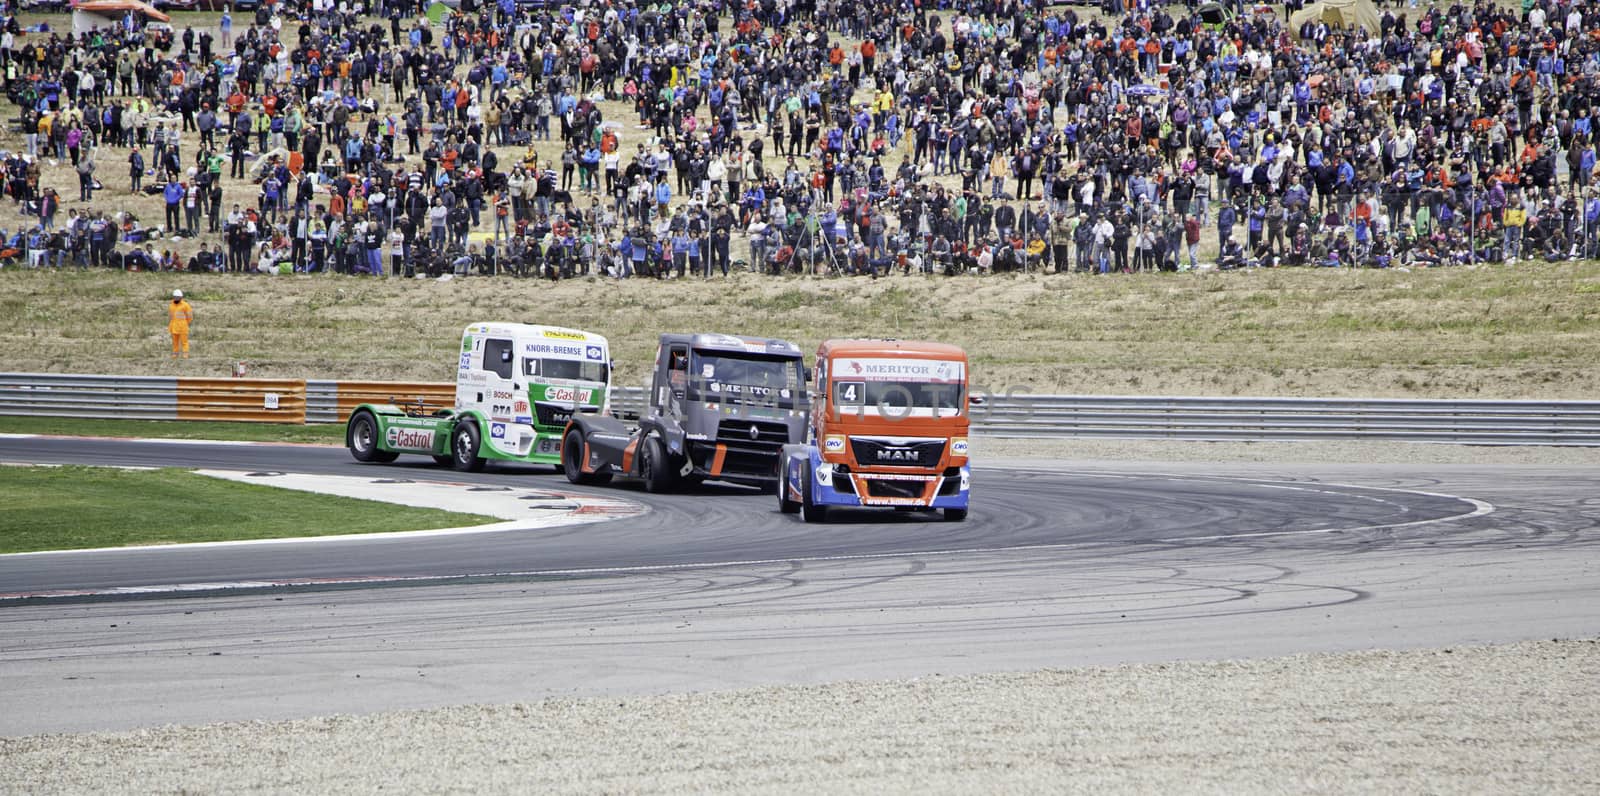 European championship trucks by esebene